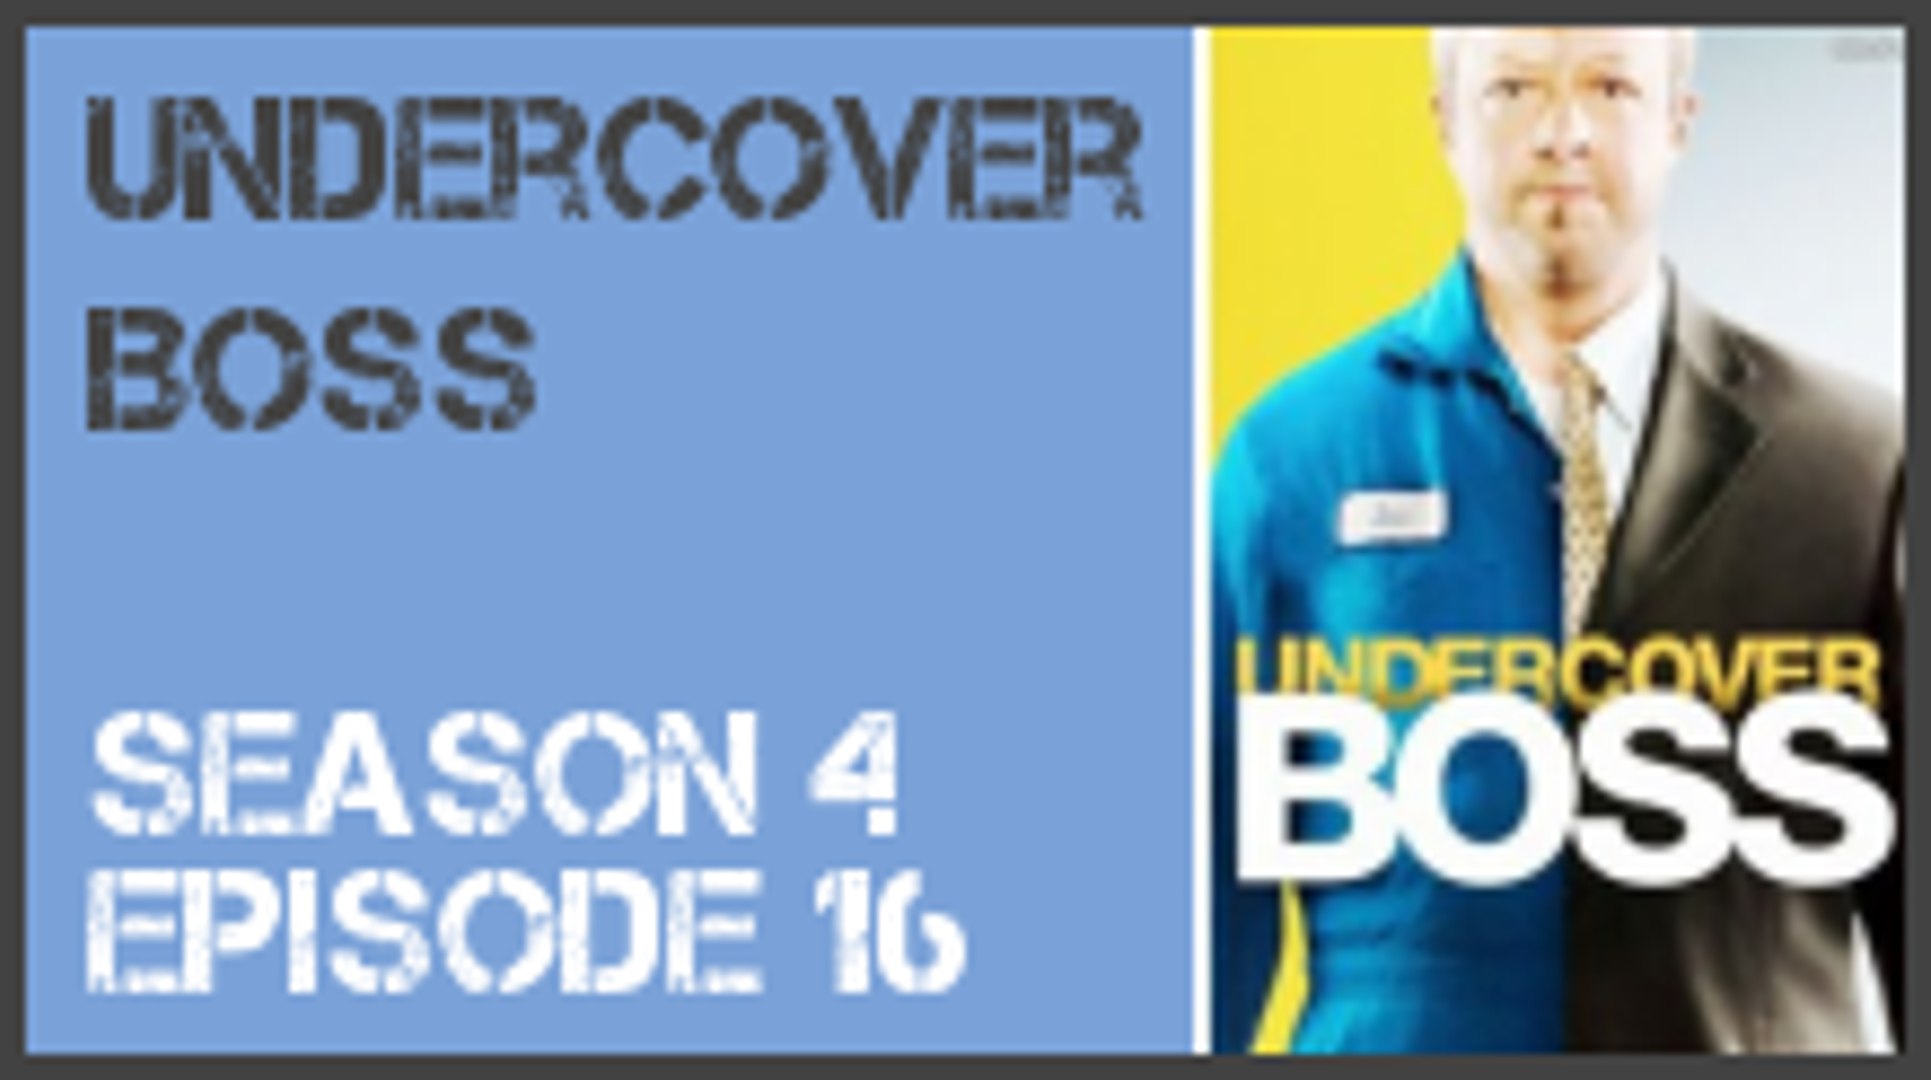 Undercover Boss season 4 episode 16 